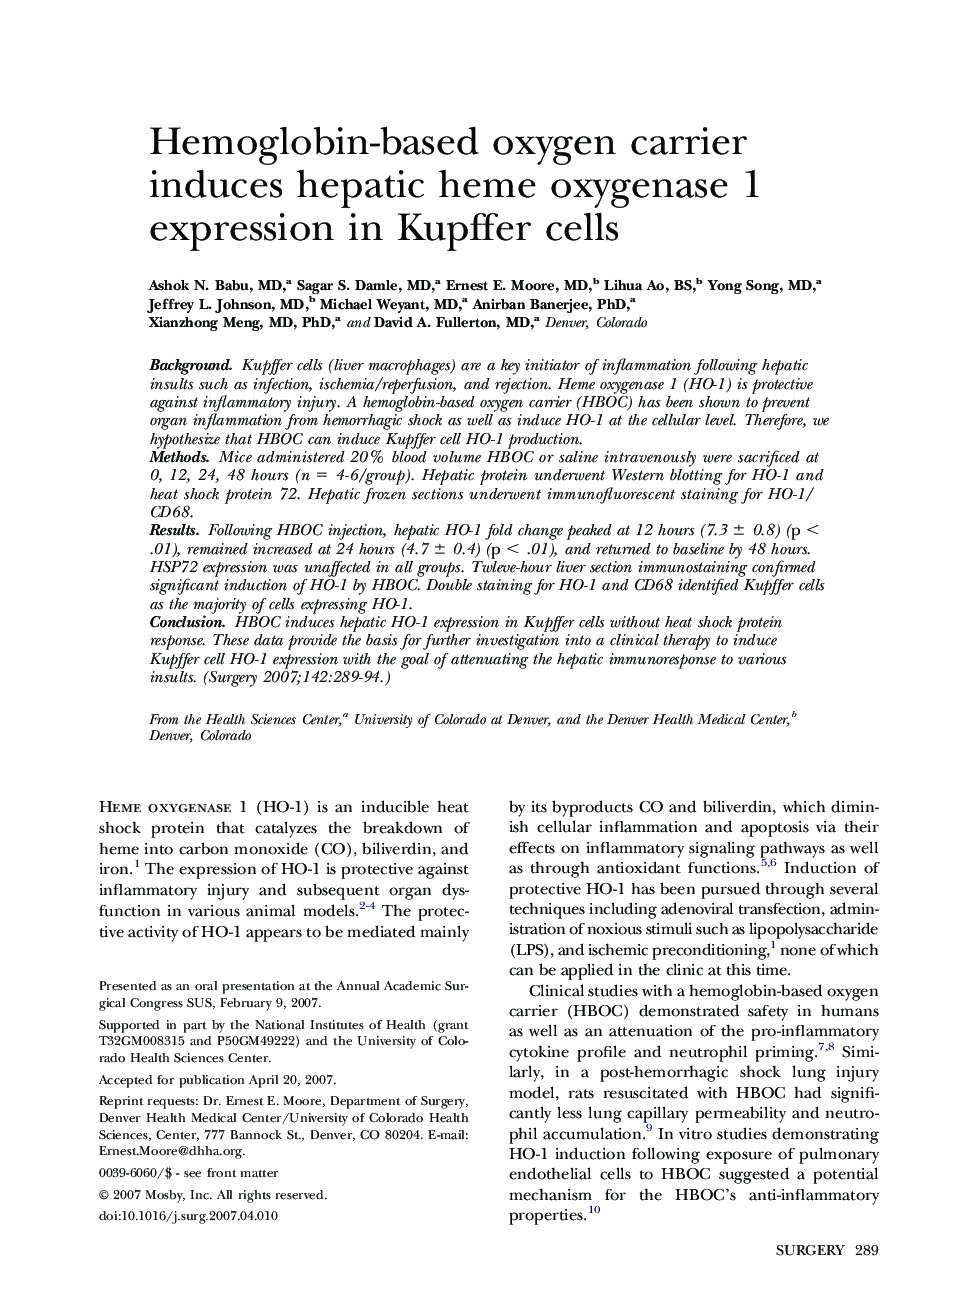 Hemoglobin-based oxygen carrier induces hepatic heme oxygenase 1 expression in Kupffer cells 